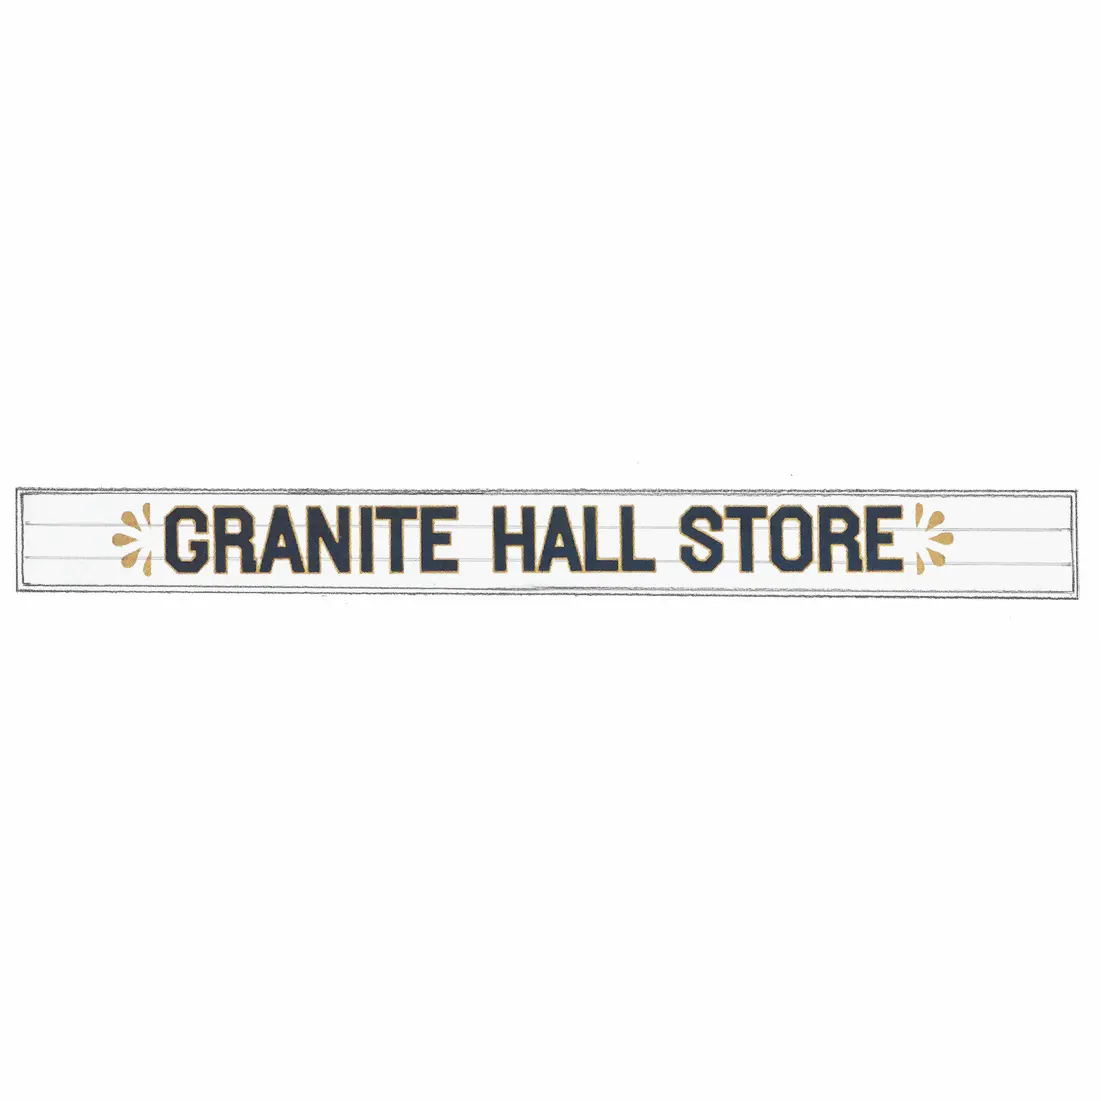 Granite Hall Store Gets Saucy